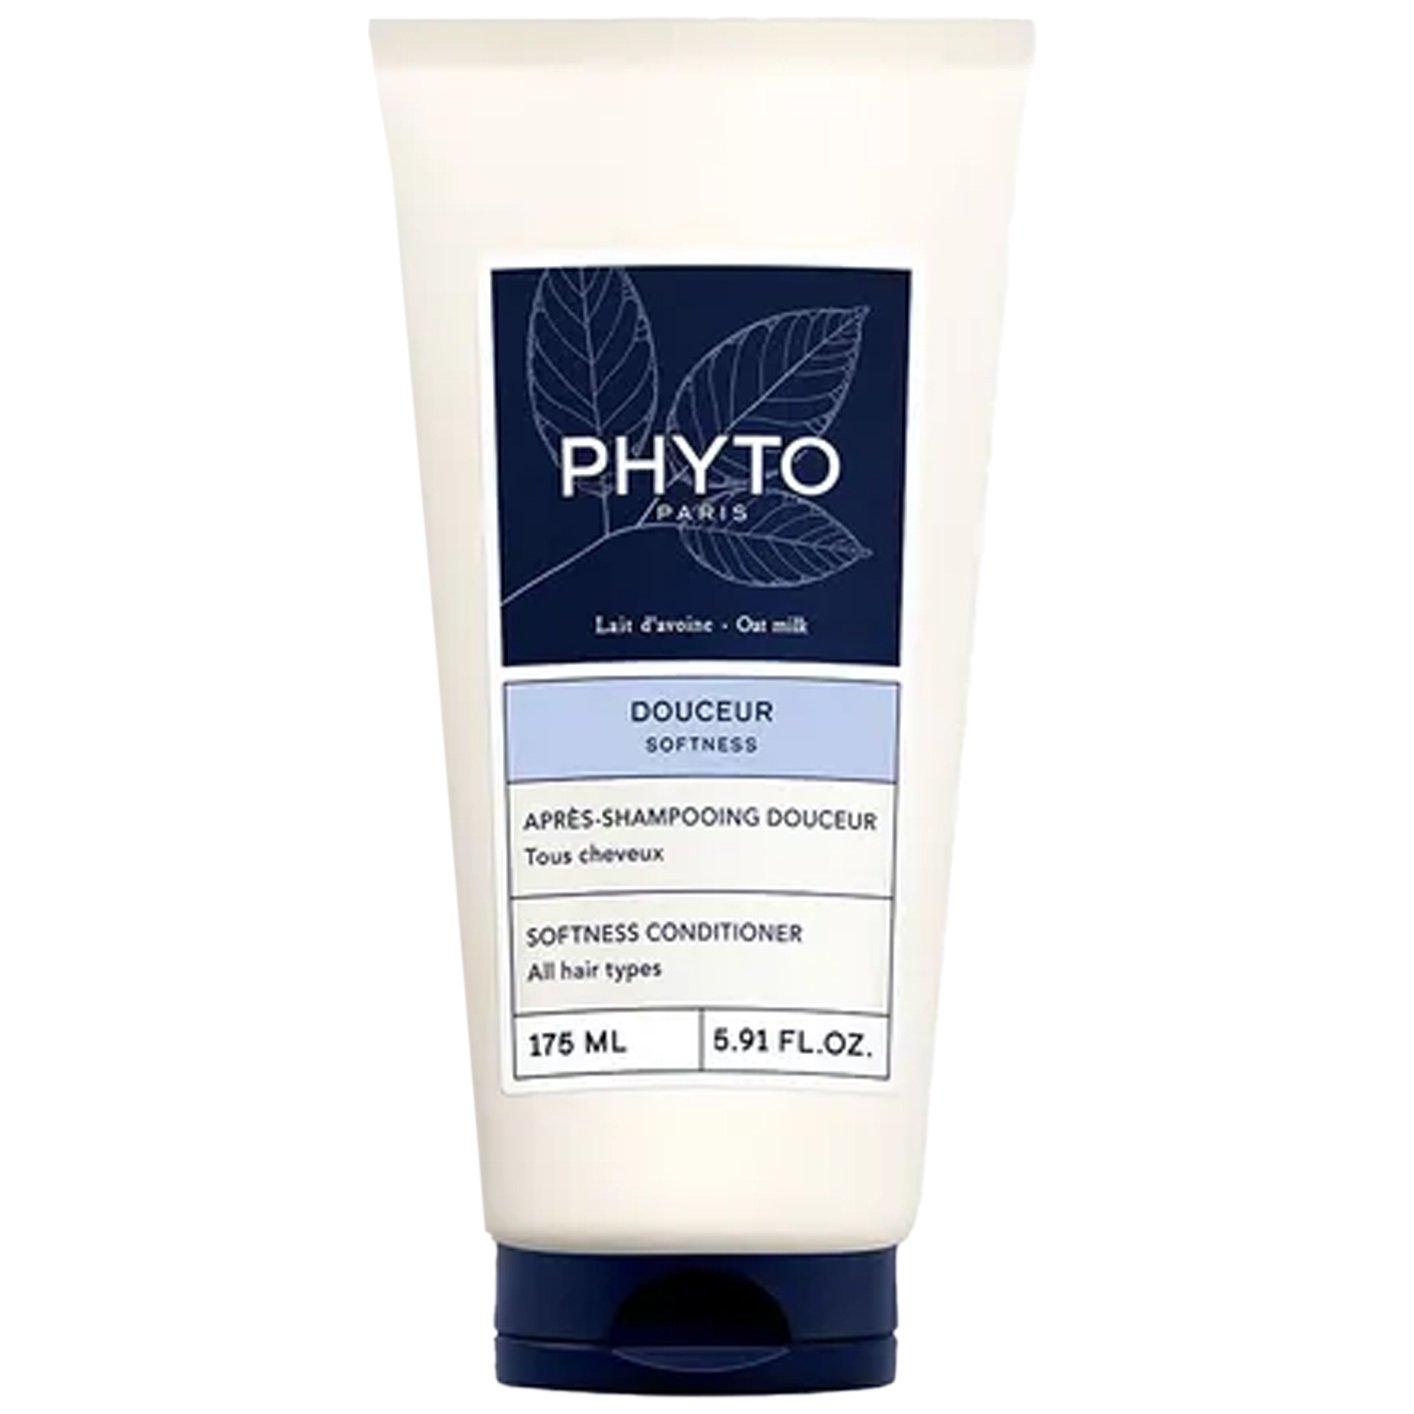 Phyto Paris Phyto Douceur Softness Conditioner for All Hair Types Μαλακτική Κρέμα για Απαλότητα & Λάμψη, Κατάλληλη για Όλους τους Τύπους Μαλλιών 175ml